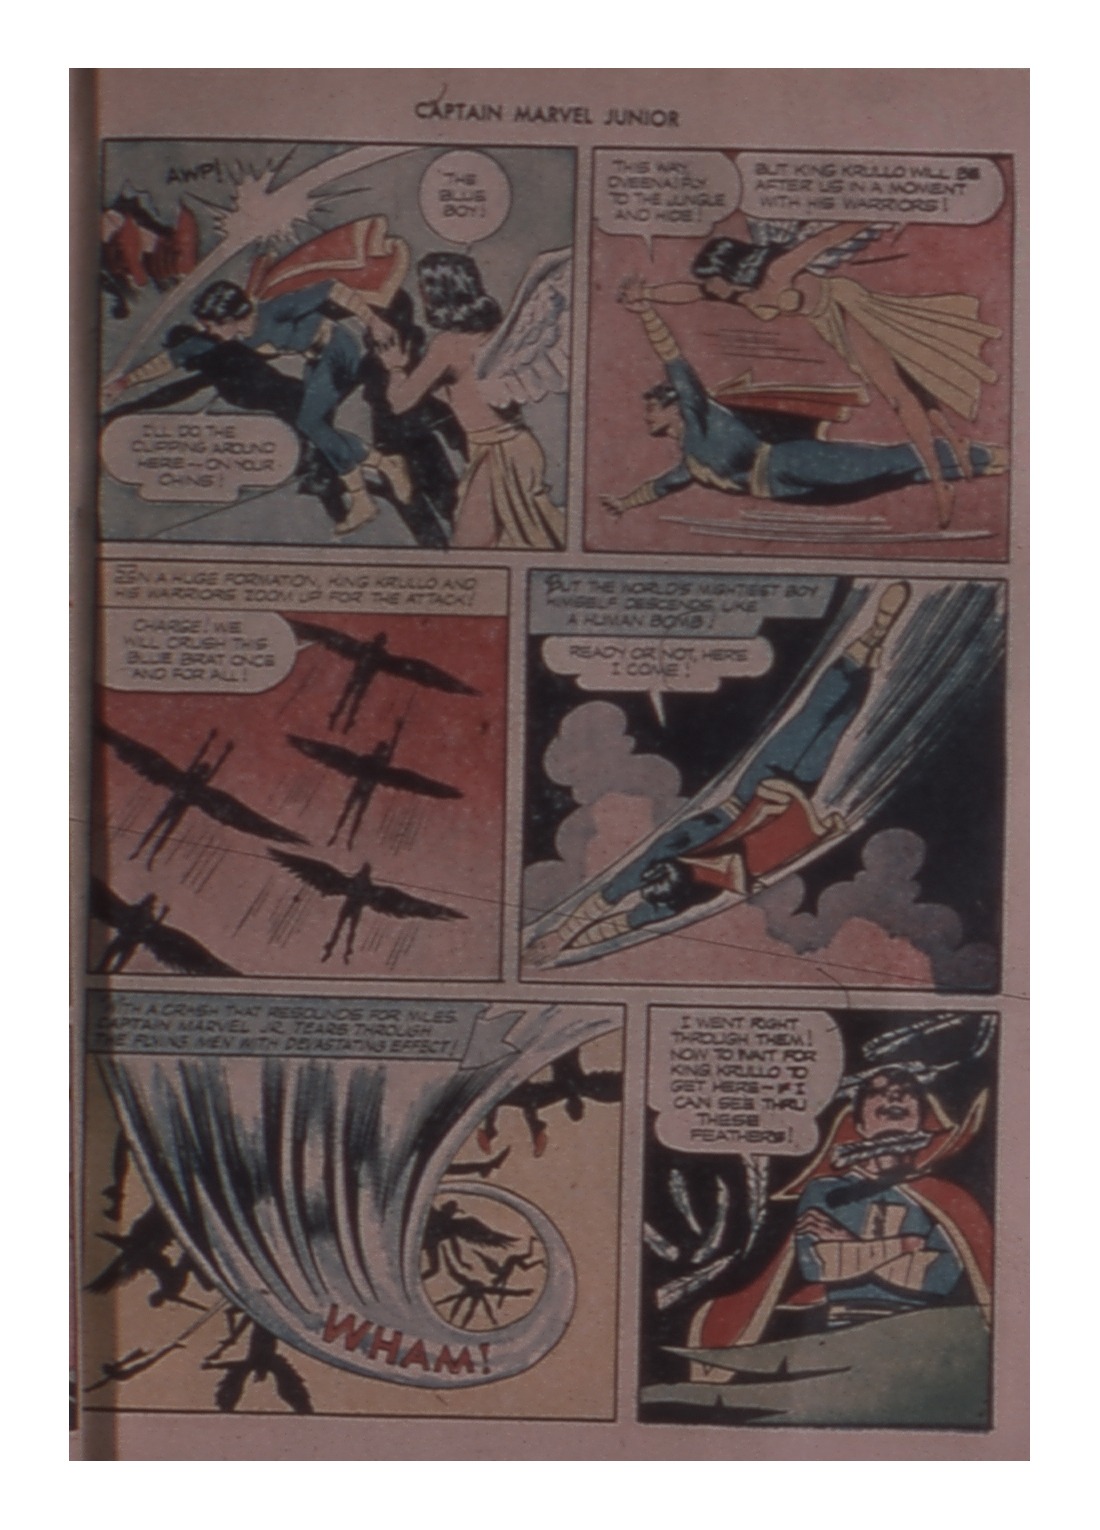 Read online Captain Marvel, Jr. comic -  Issue #47 - 47